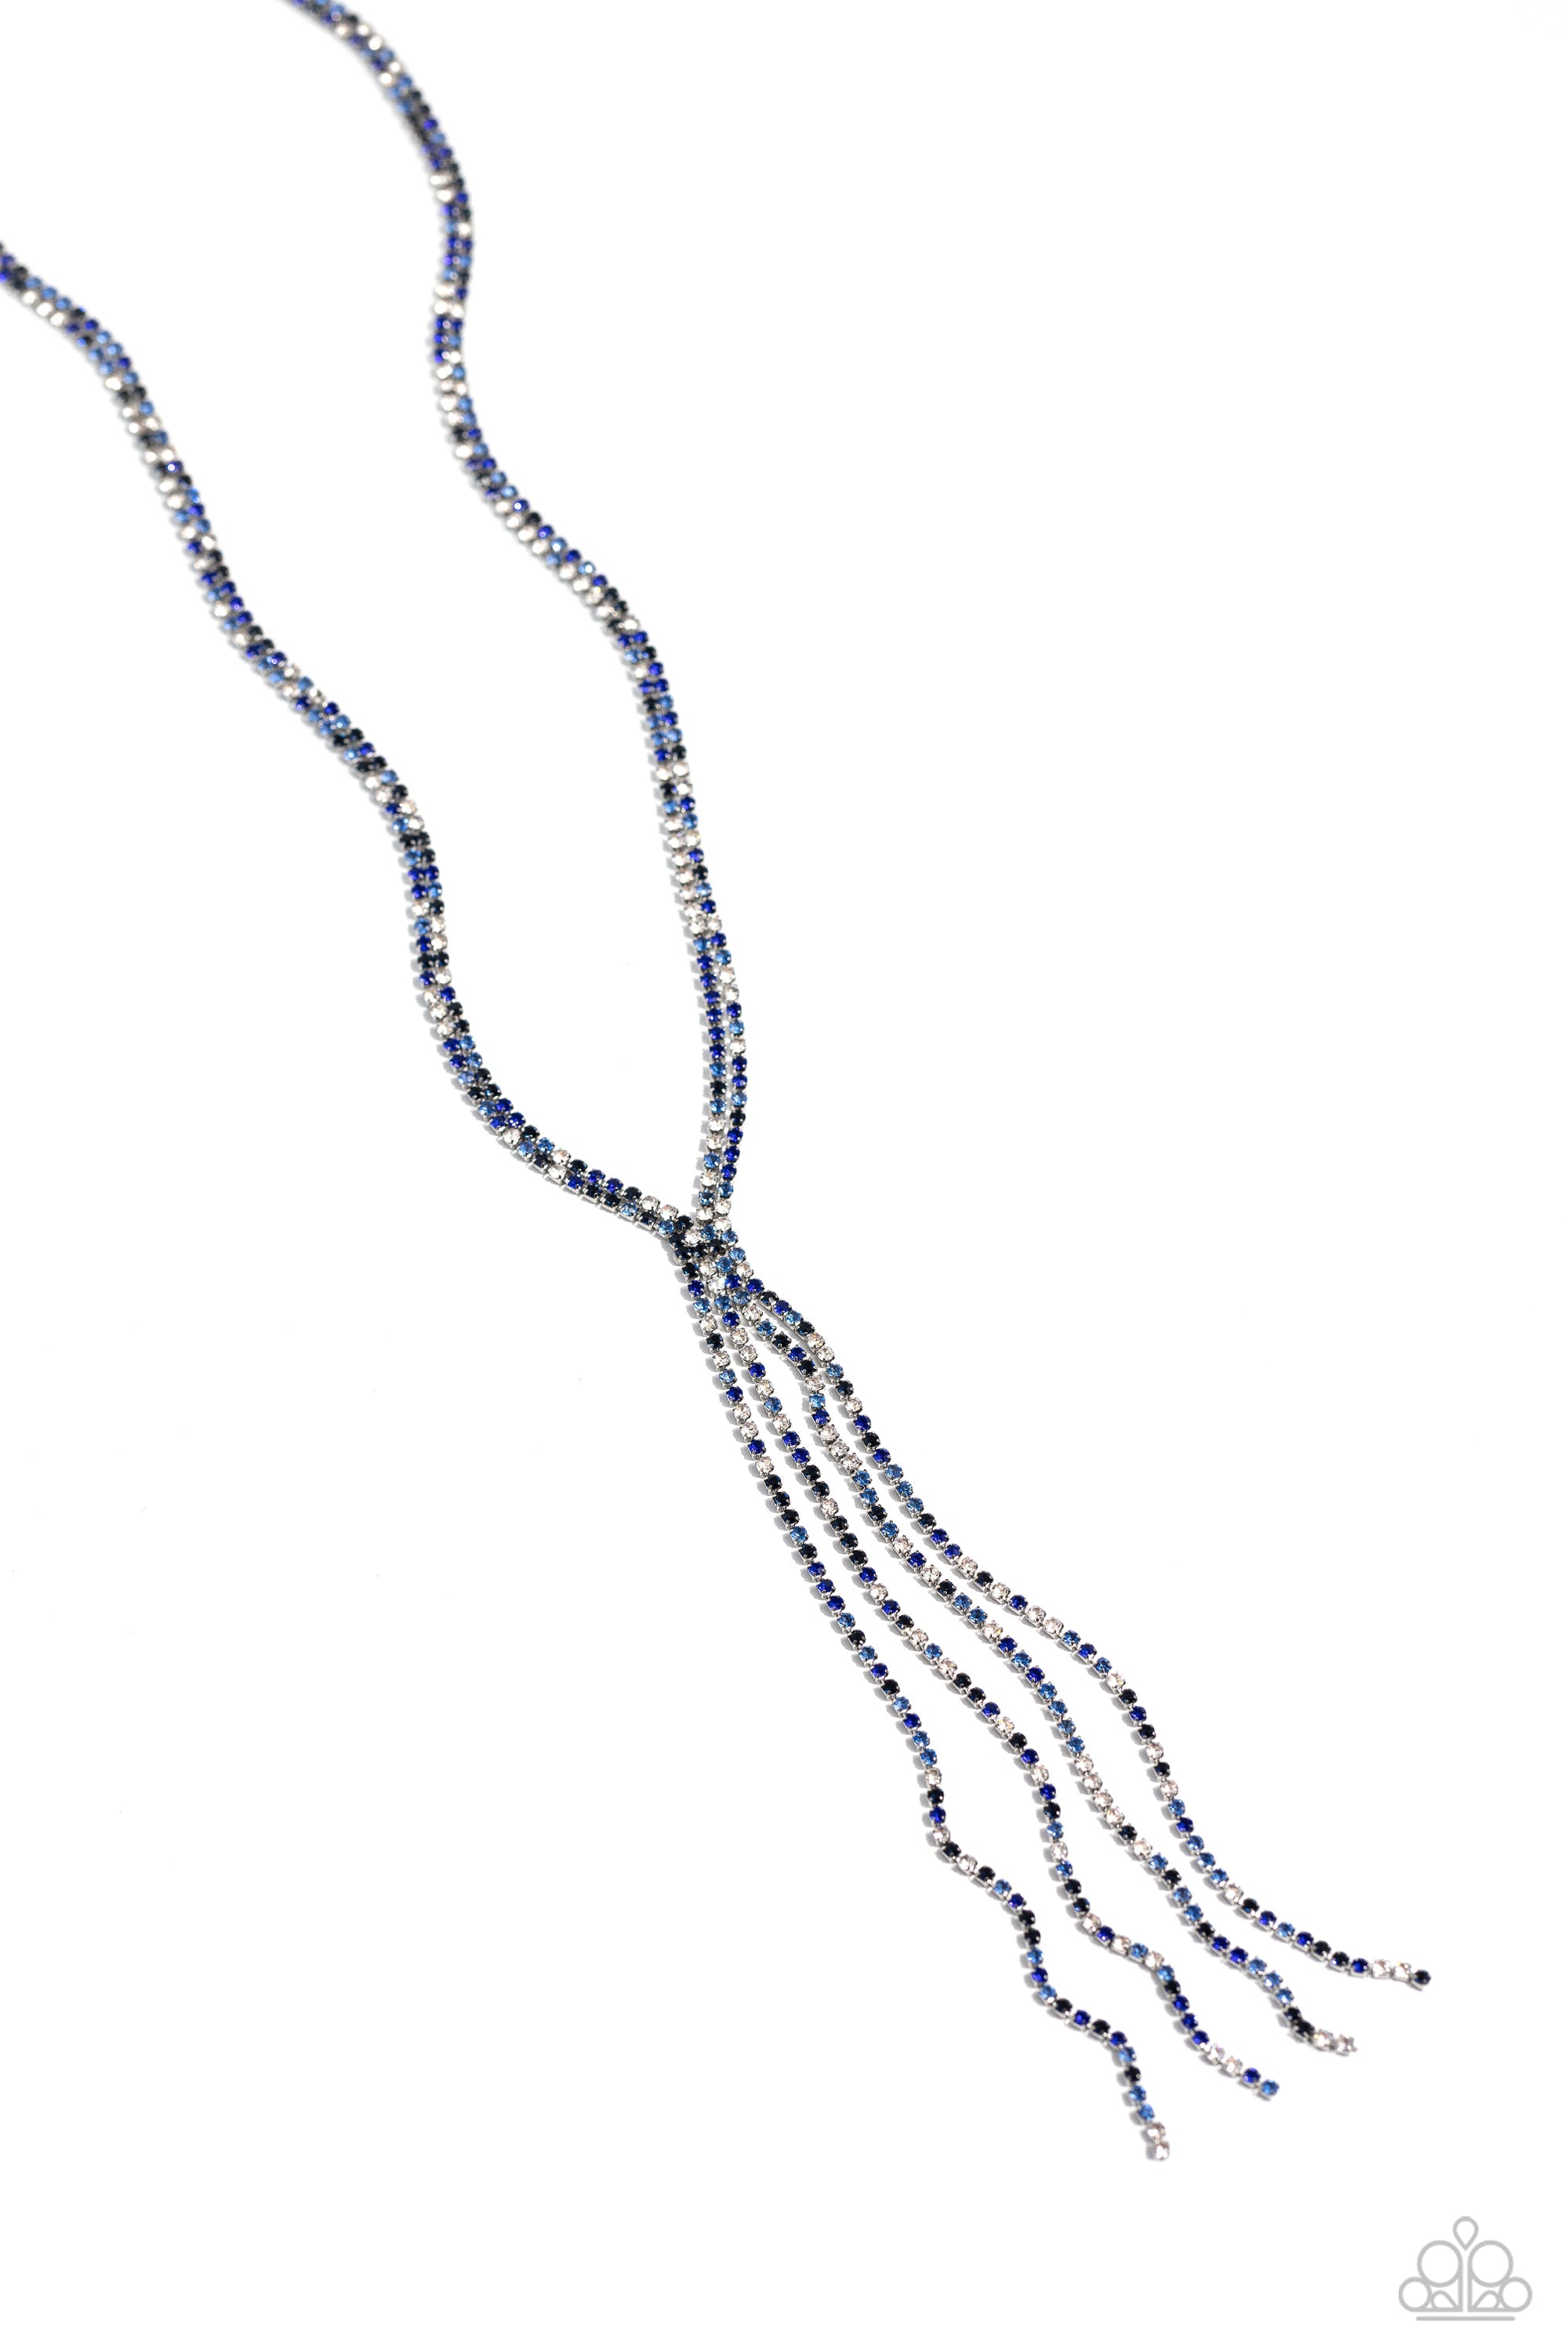 Jazz STRANDS Blue Rhinestone Necklace - Paparazzi Accessories- lightbox - CarasShop.com - $5 Jewelry by Cara Jewels